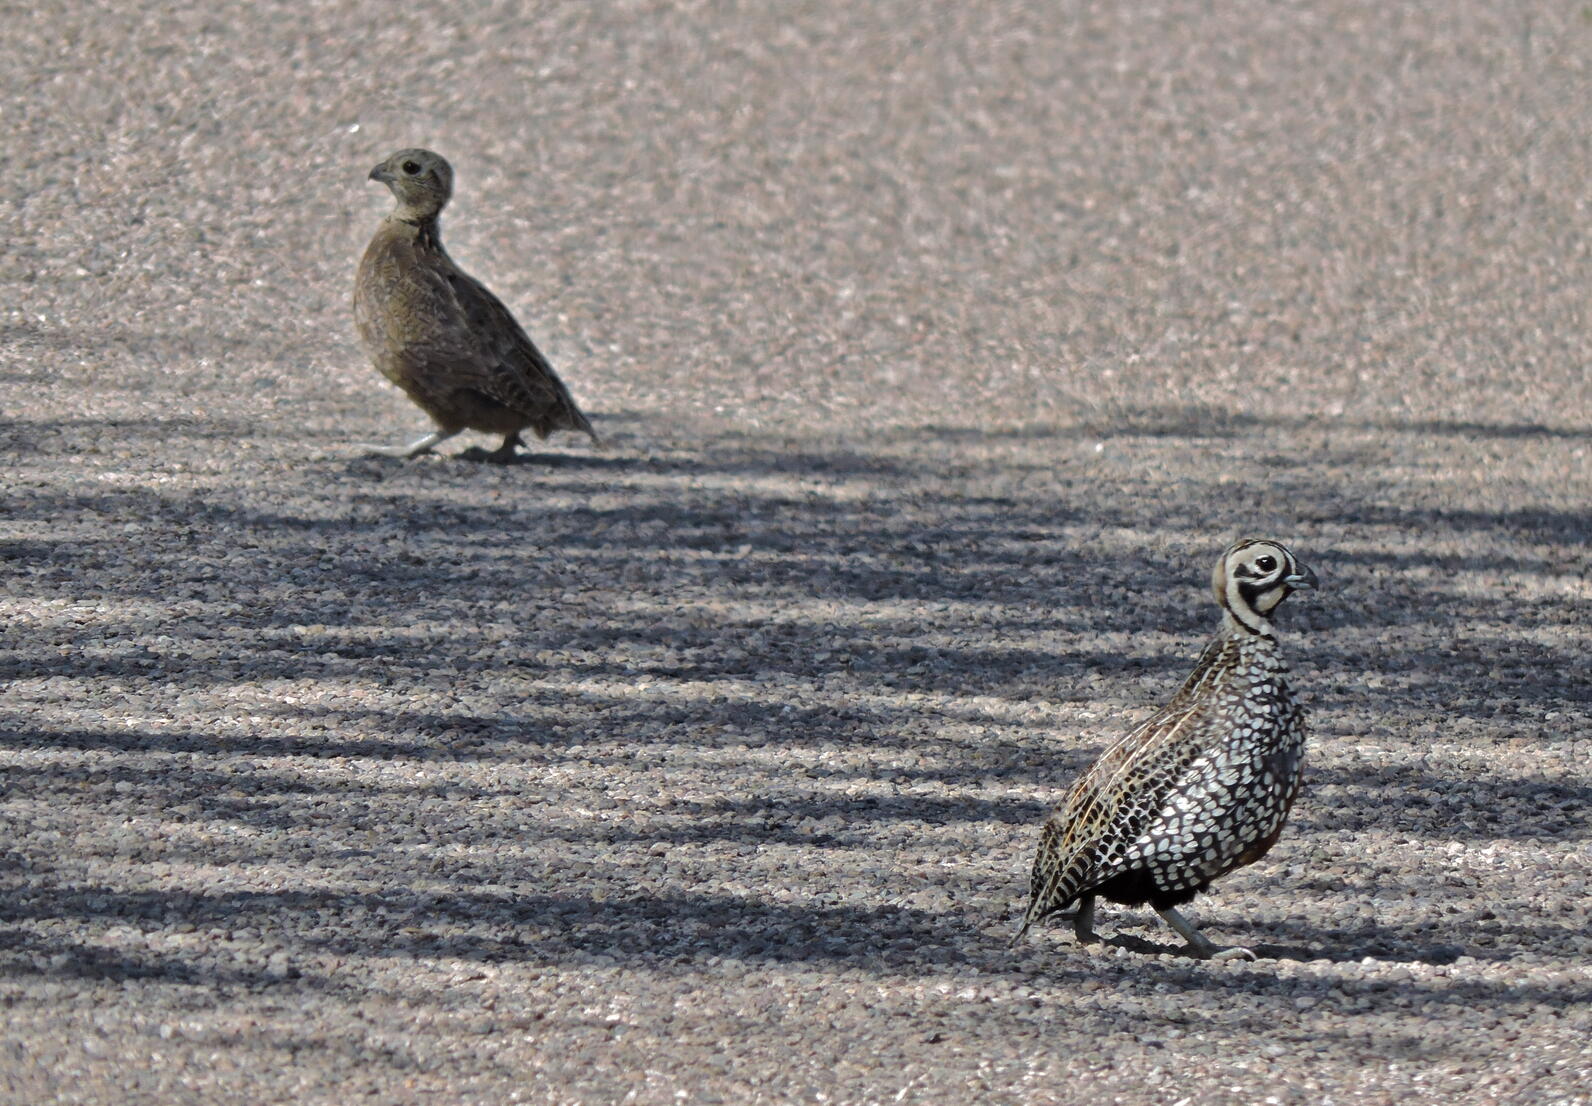 A male-female pair of Montezuma Quail forage in the road.